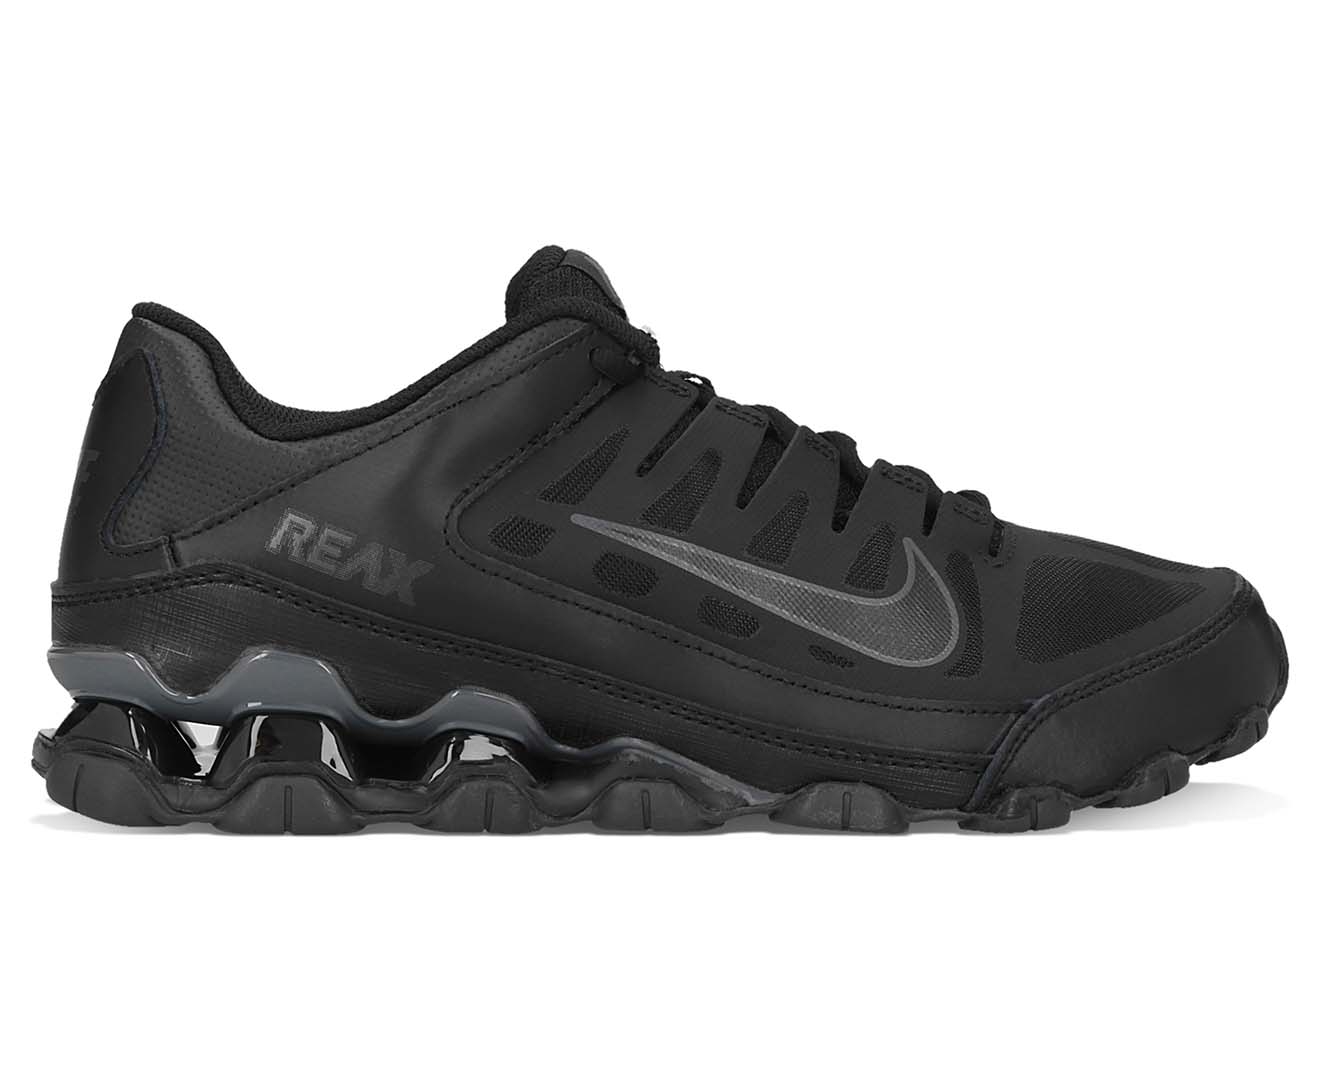 Nike Men's Reax 8 TR Mesh Training Shoes - Black/Anthracite | Catch.com.au